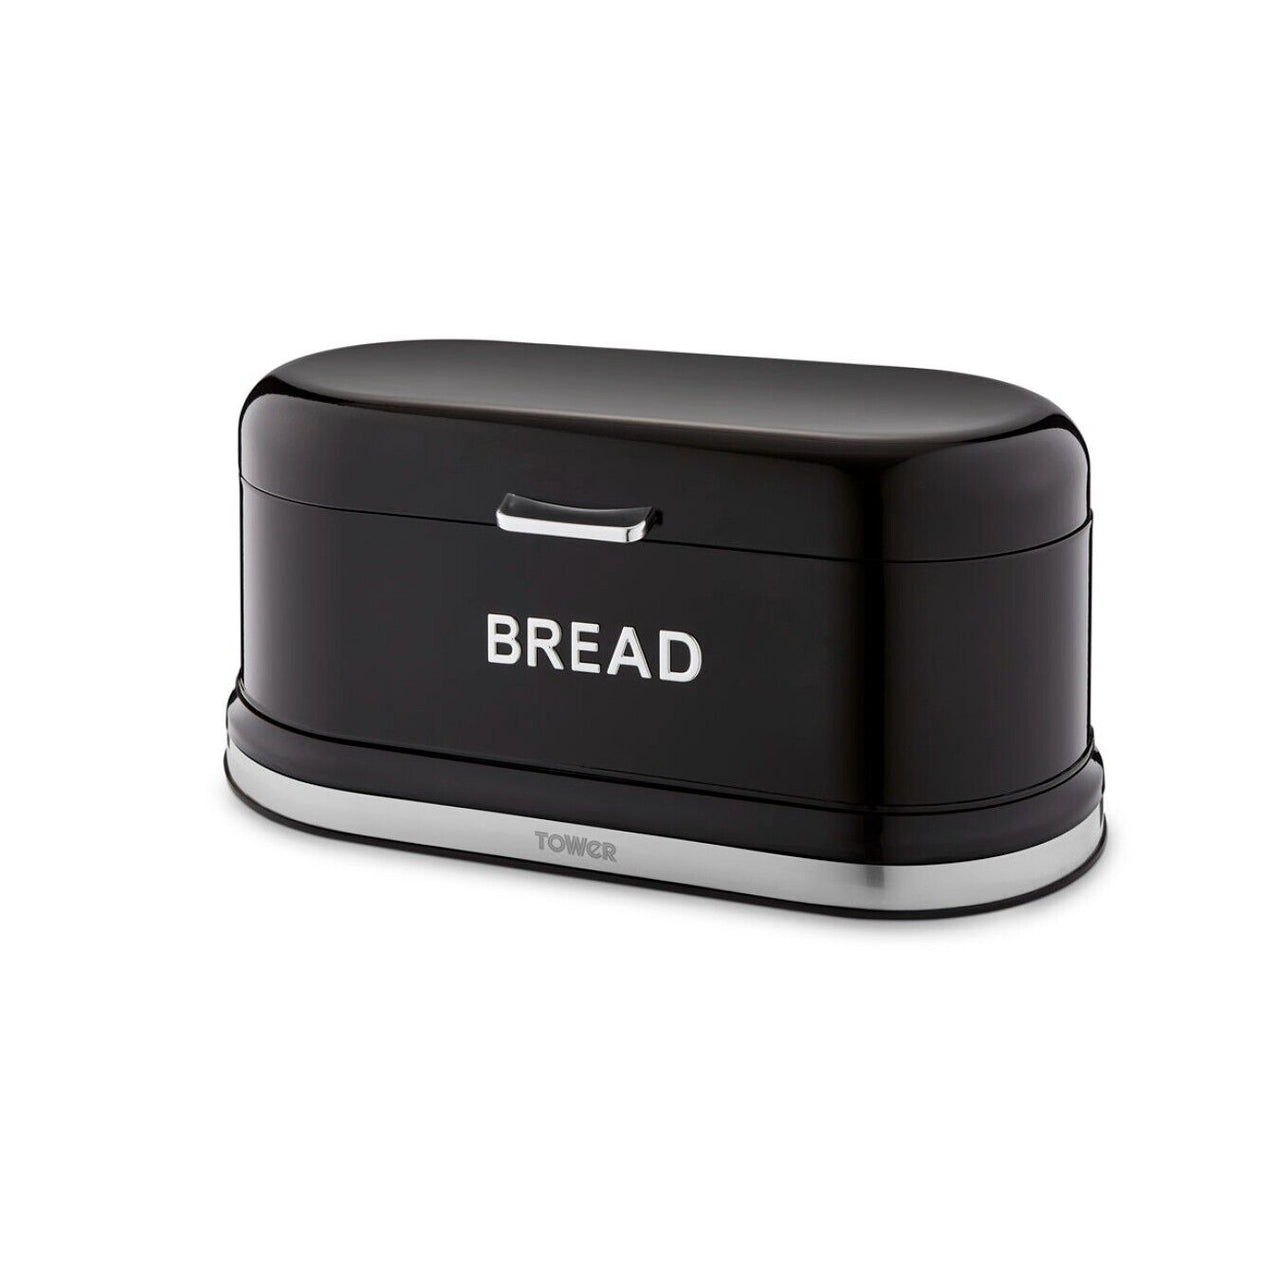 Tower Belle Bread Bin in Noir Black Stylish Kitchen Storage T826170NOR